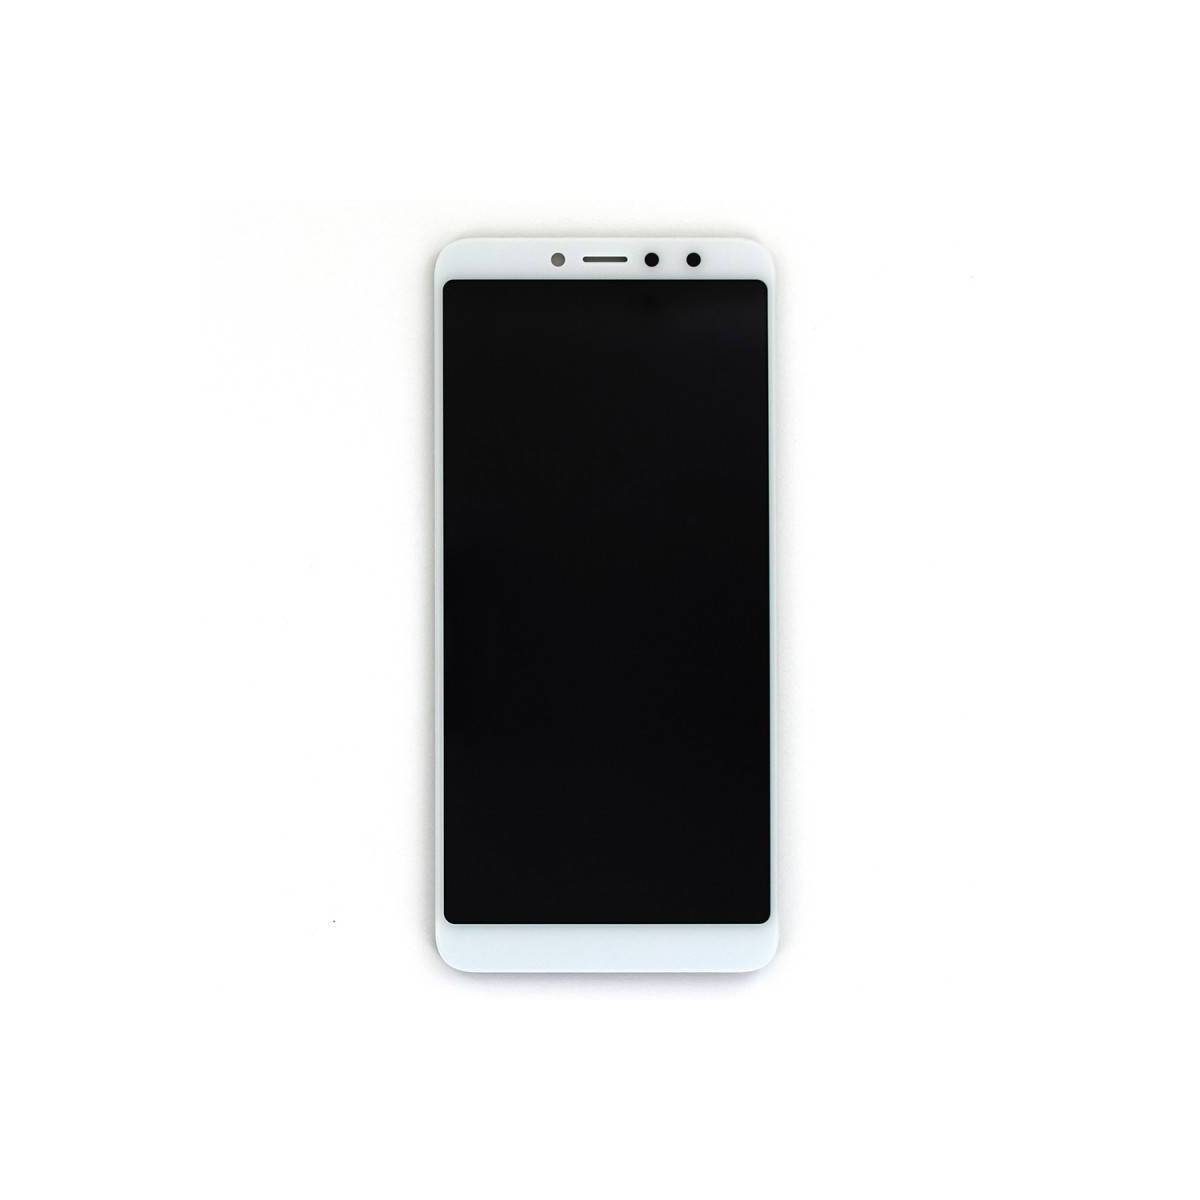 Ecran Blanc Xiaomi Redmi S2